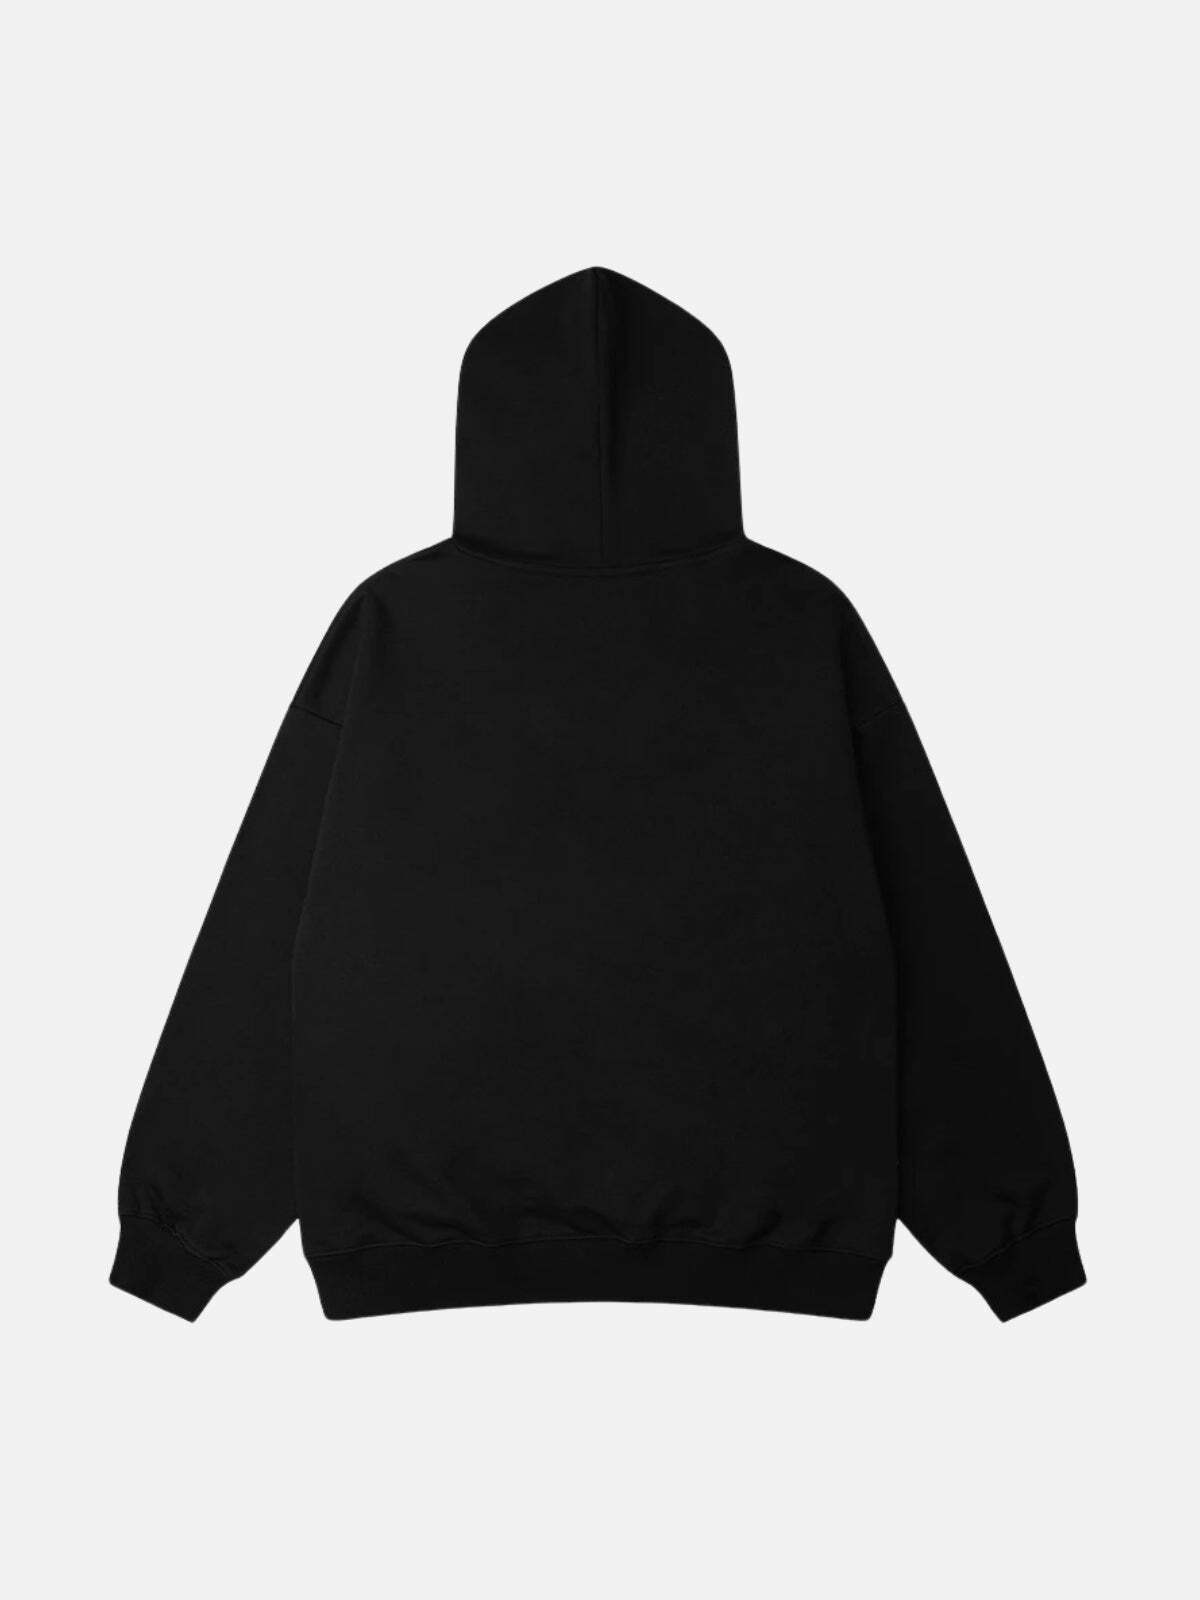 shadow print hoodie edgy & abstract streetwear 6691